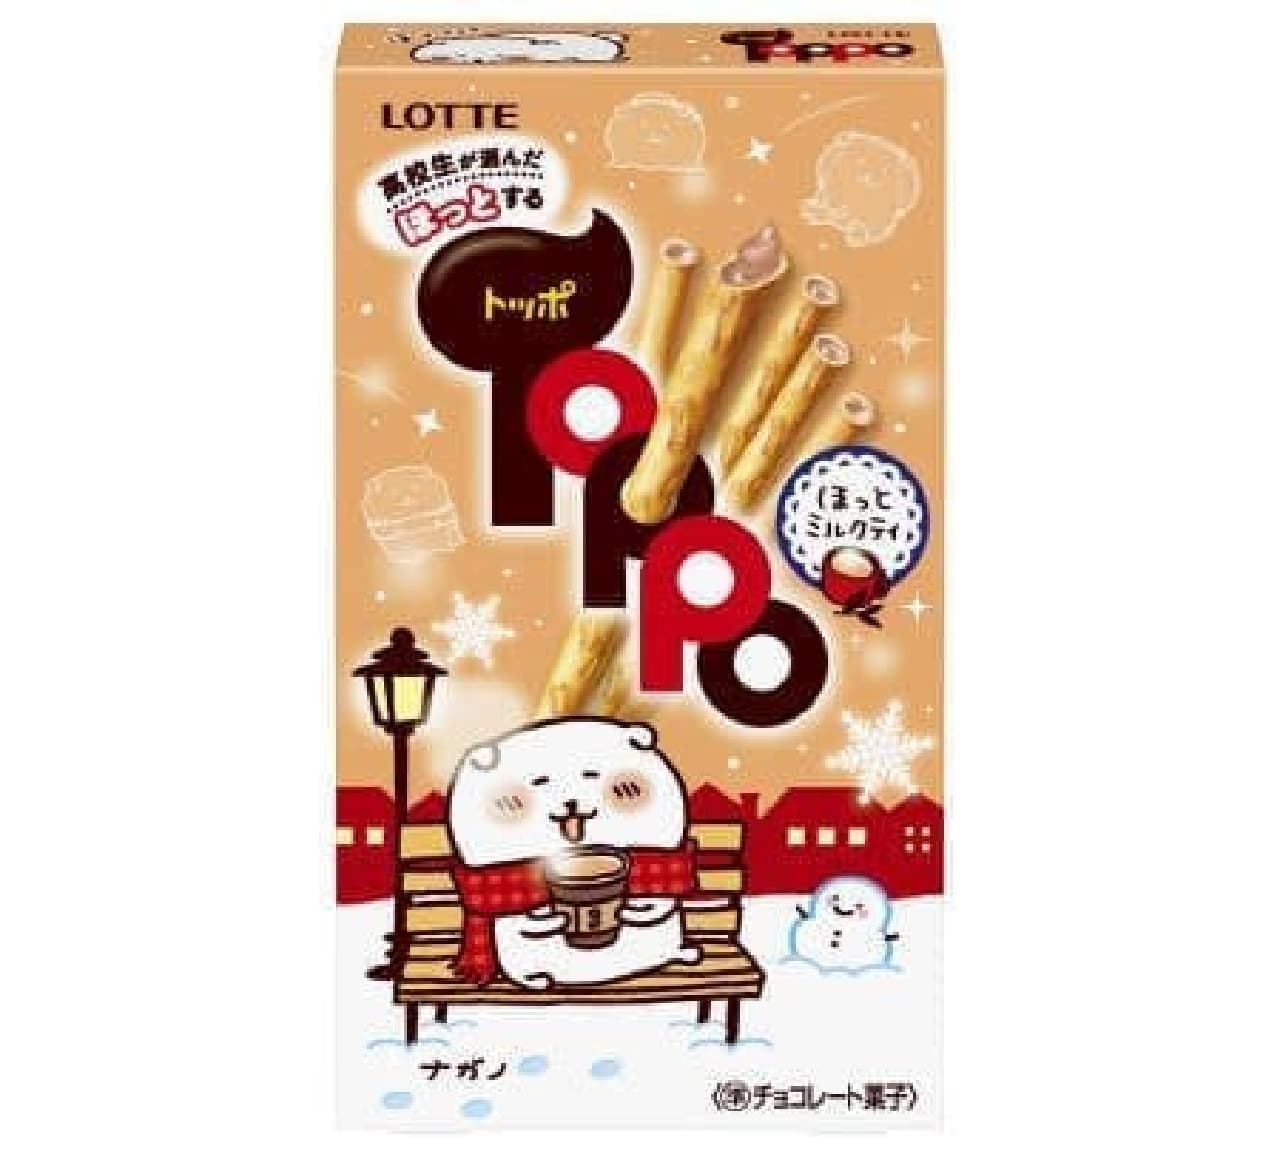 "Toppo [milk tea]" is a milk tea flavored toppo